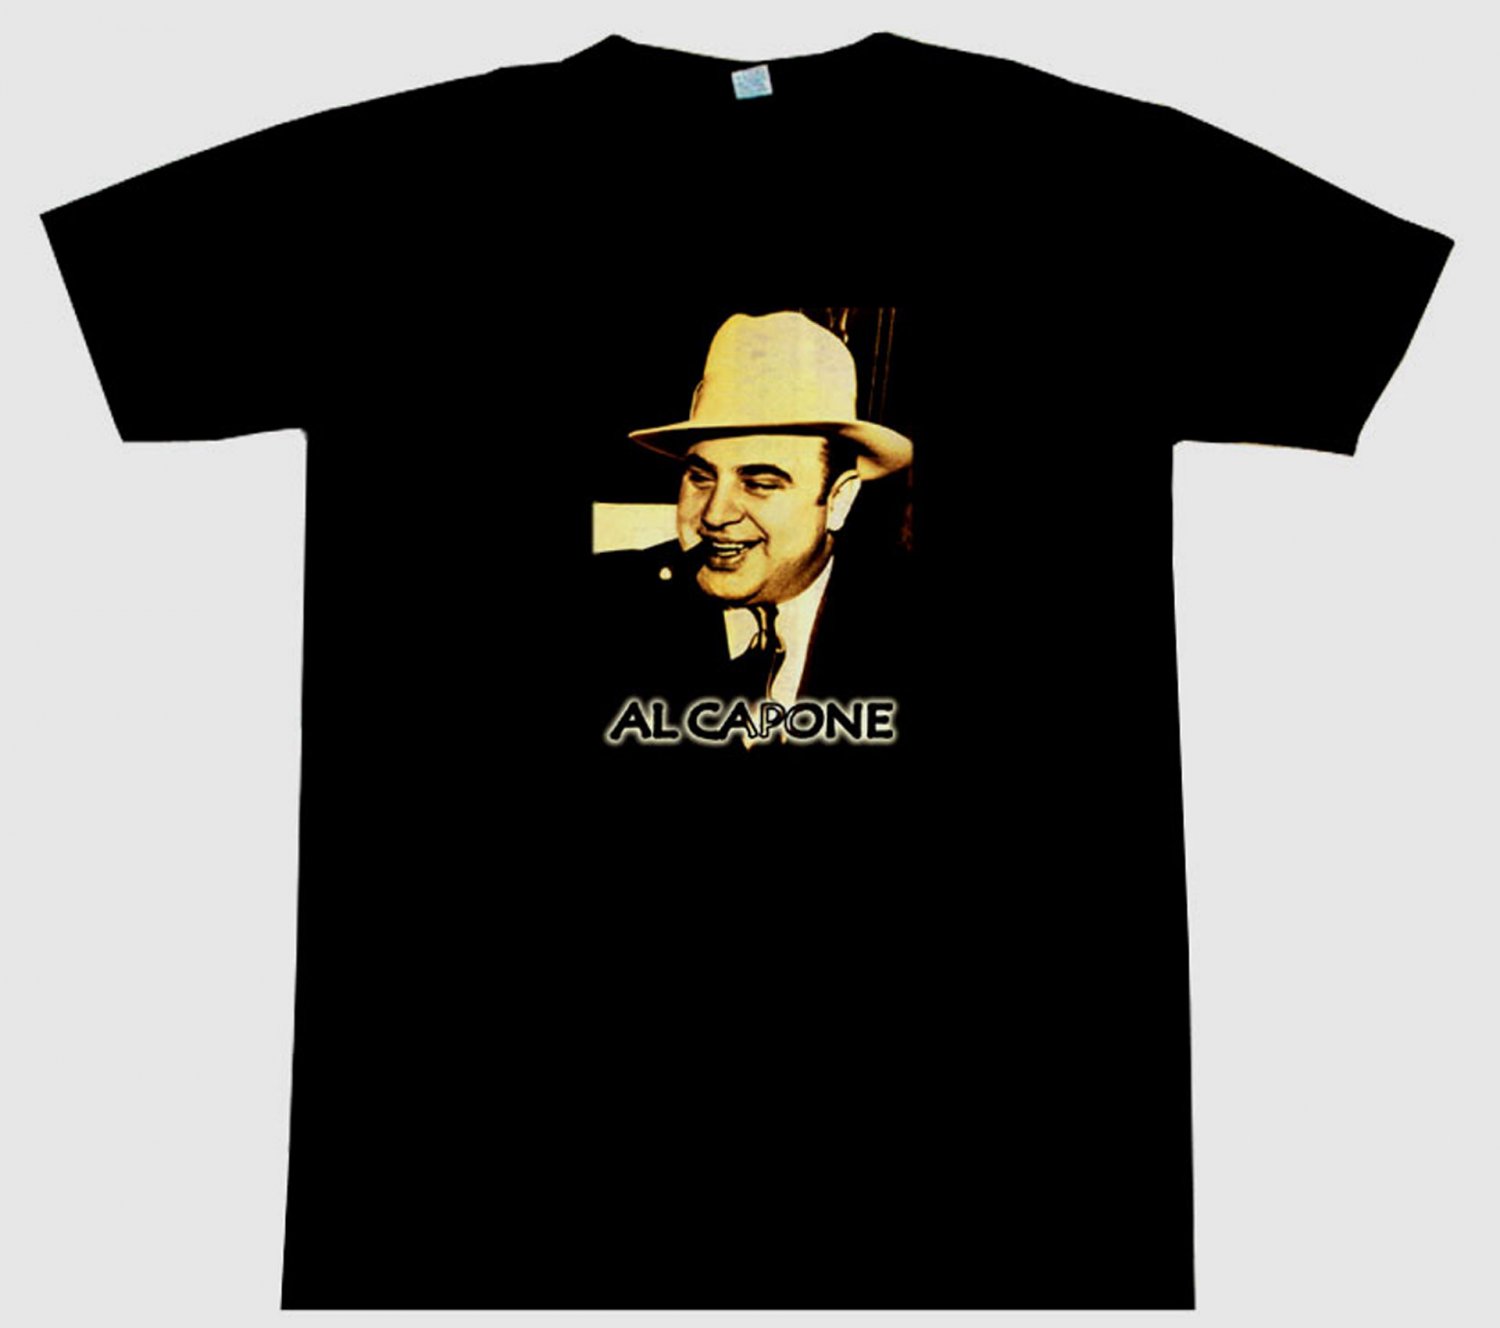 Al Capone EXCELLENT Tee T-Shirt.